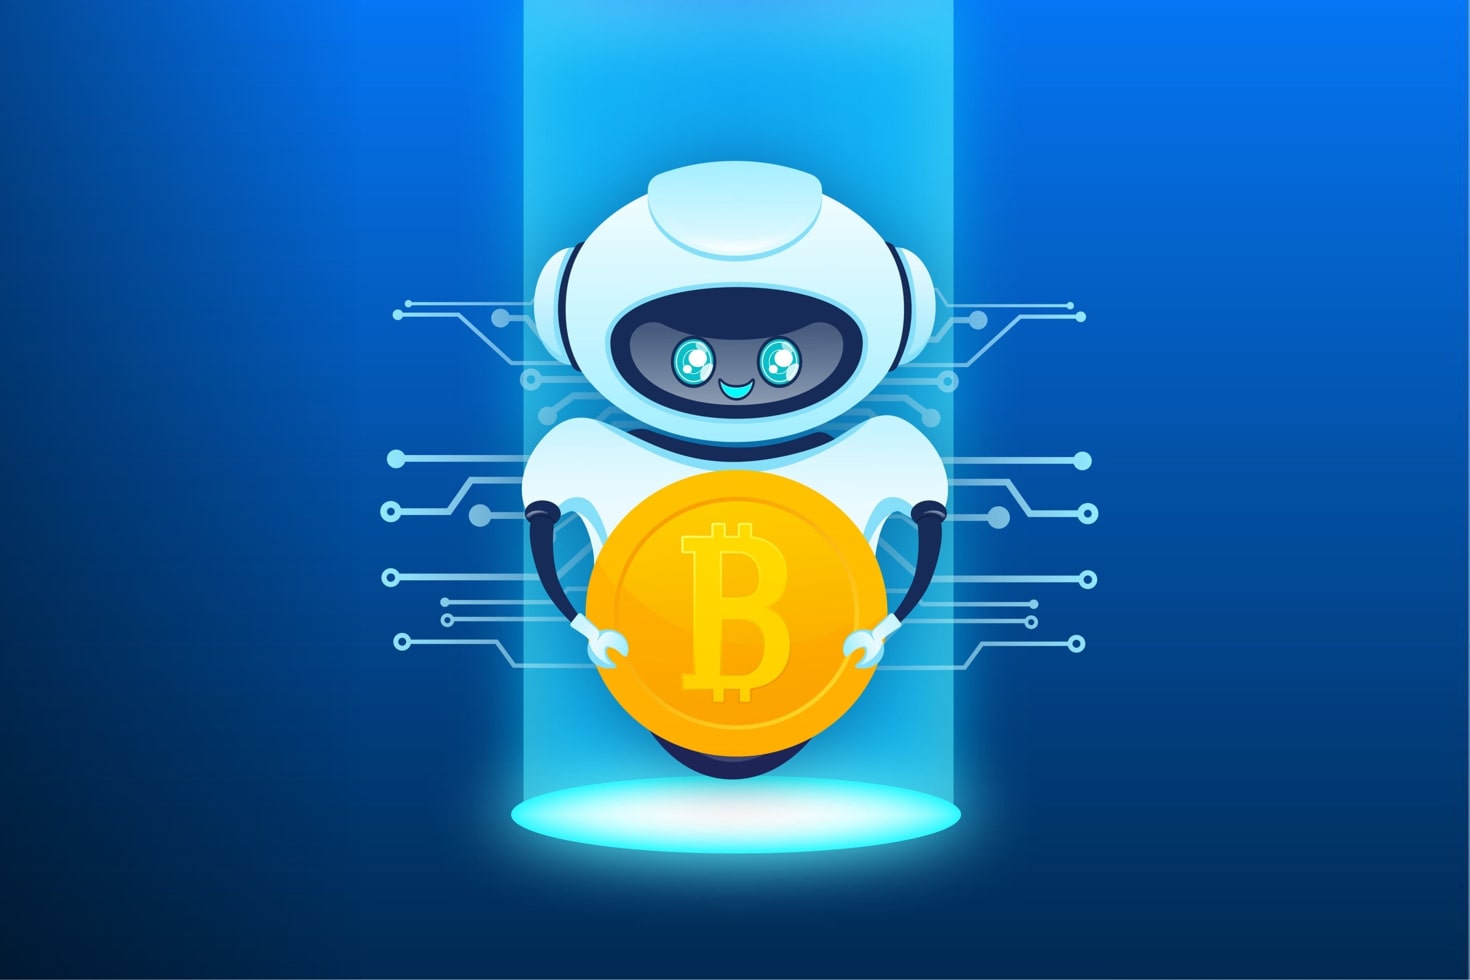 Bitcoin trading bot